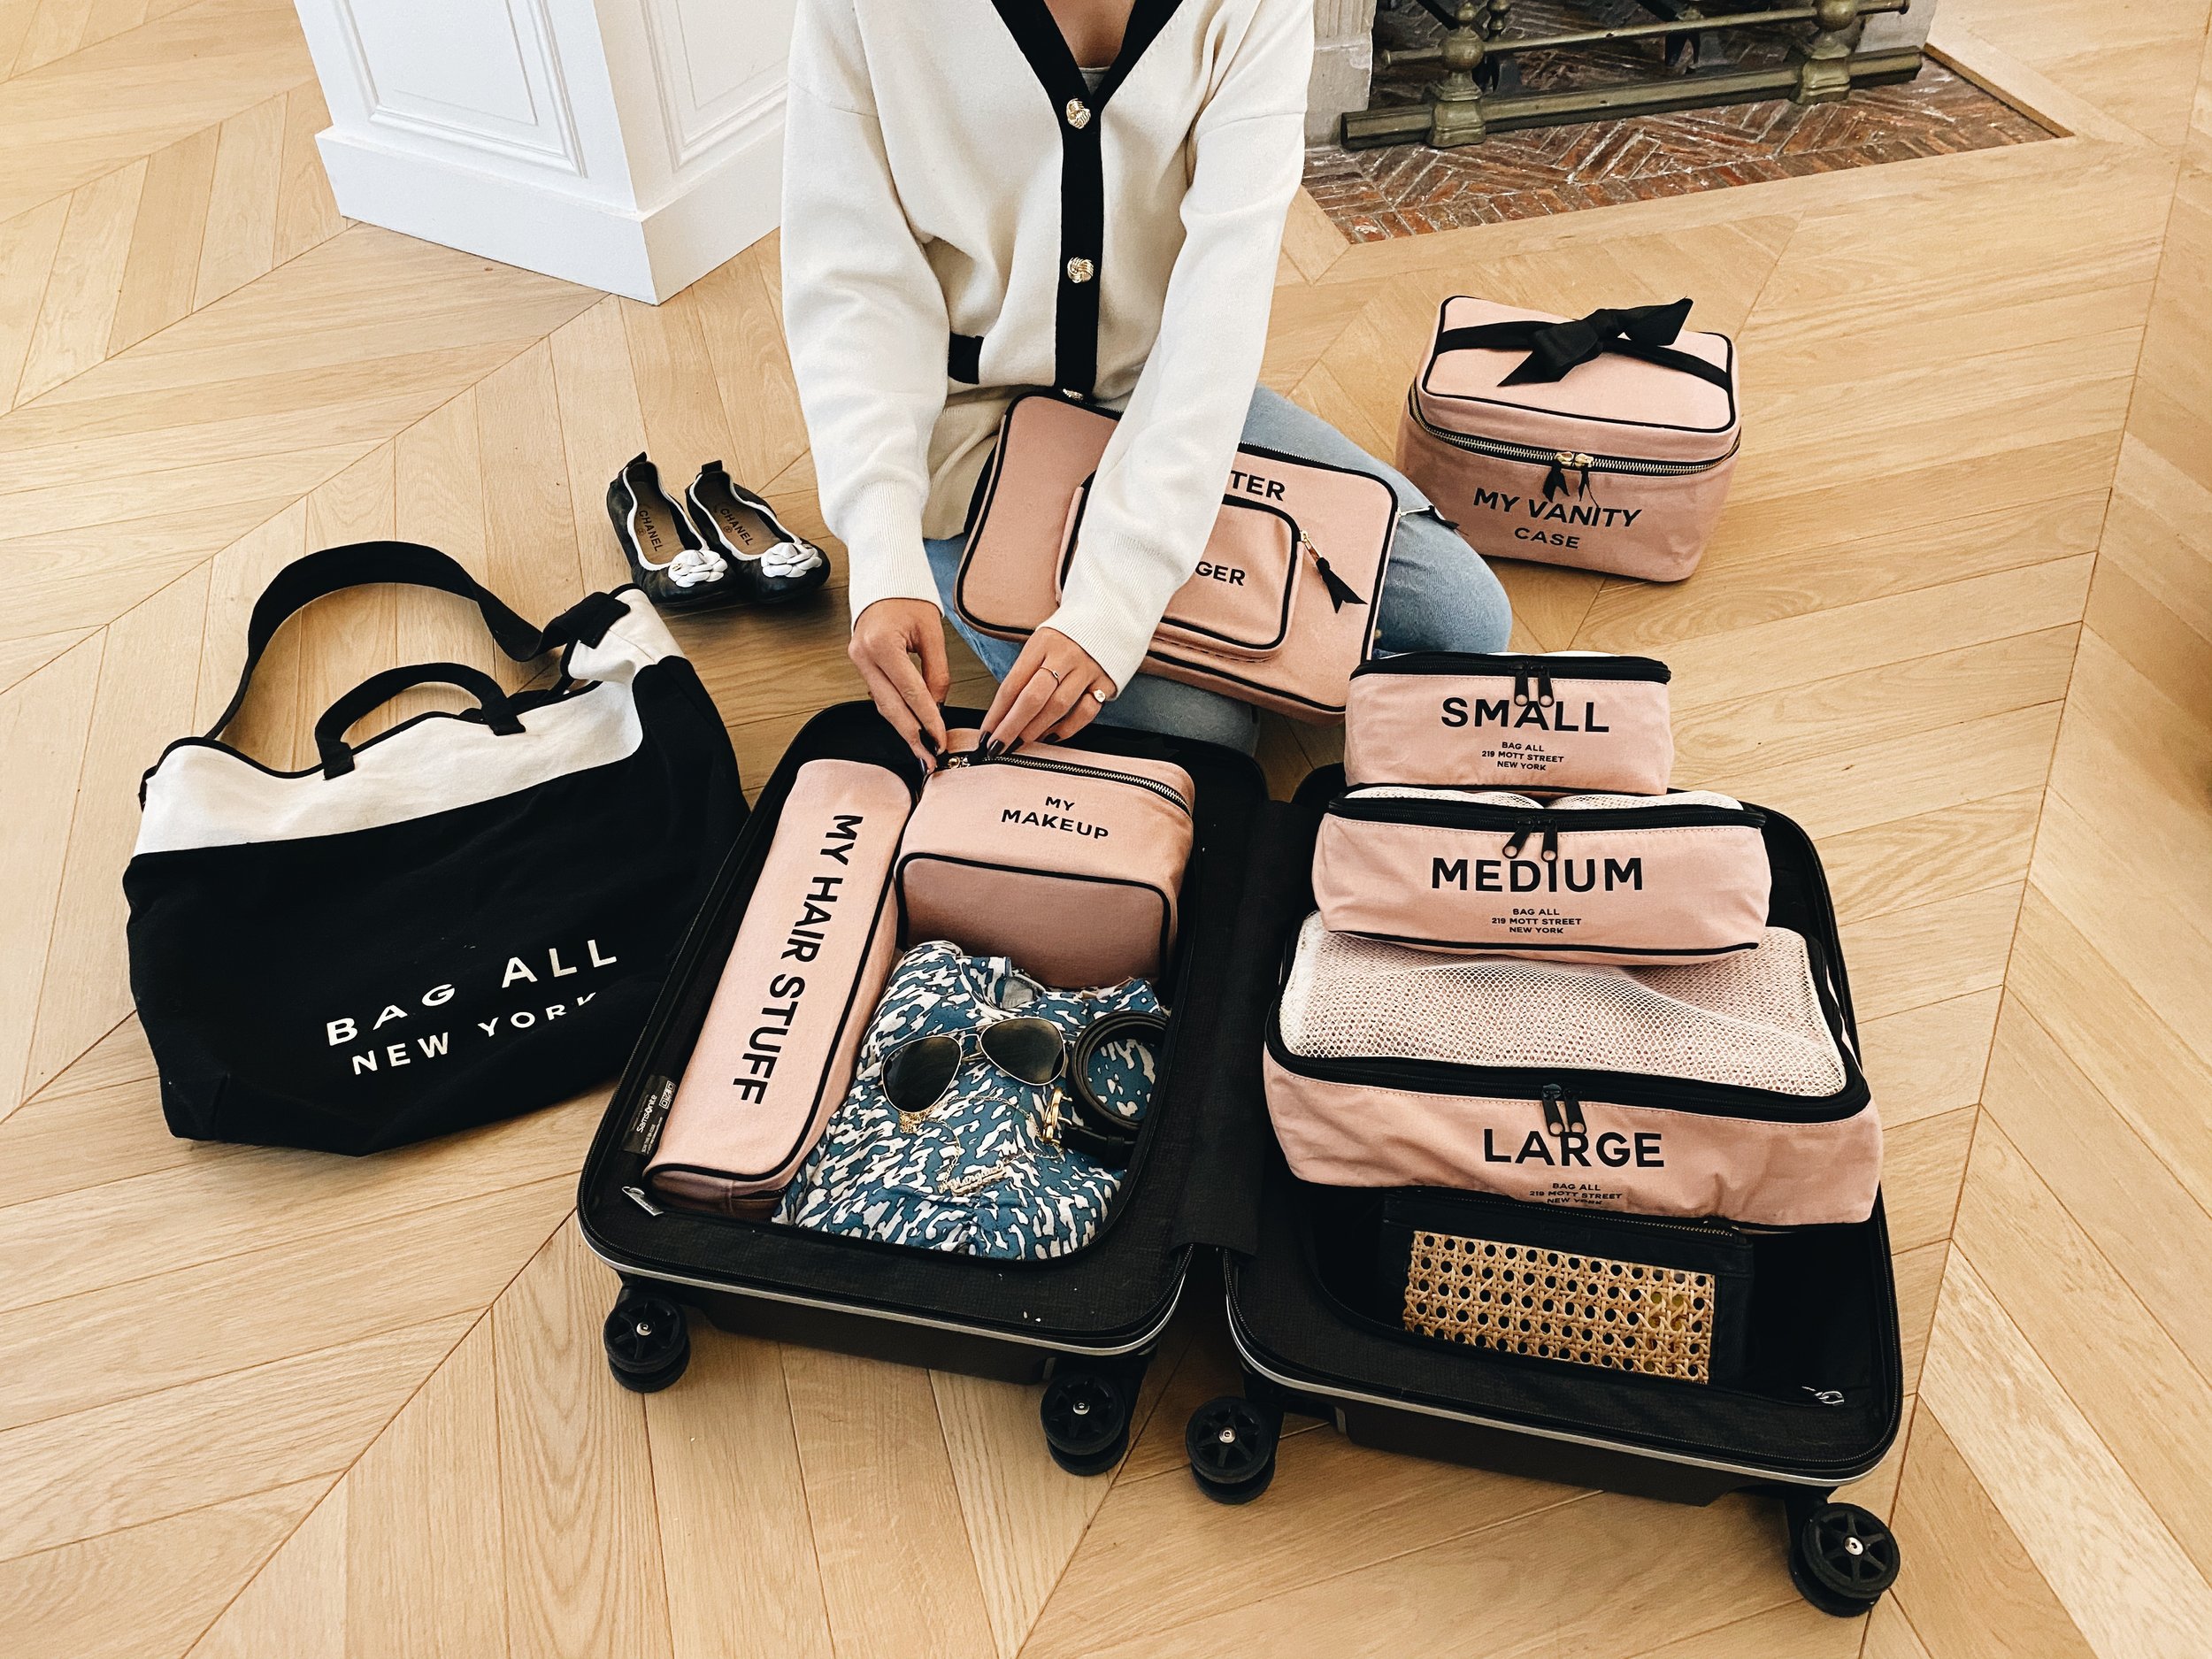 Shopping suitcase bag - Beauty & Fashion Icons